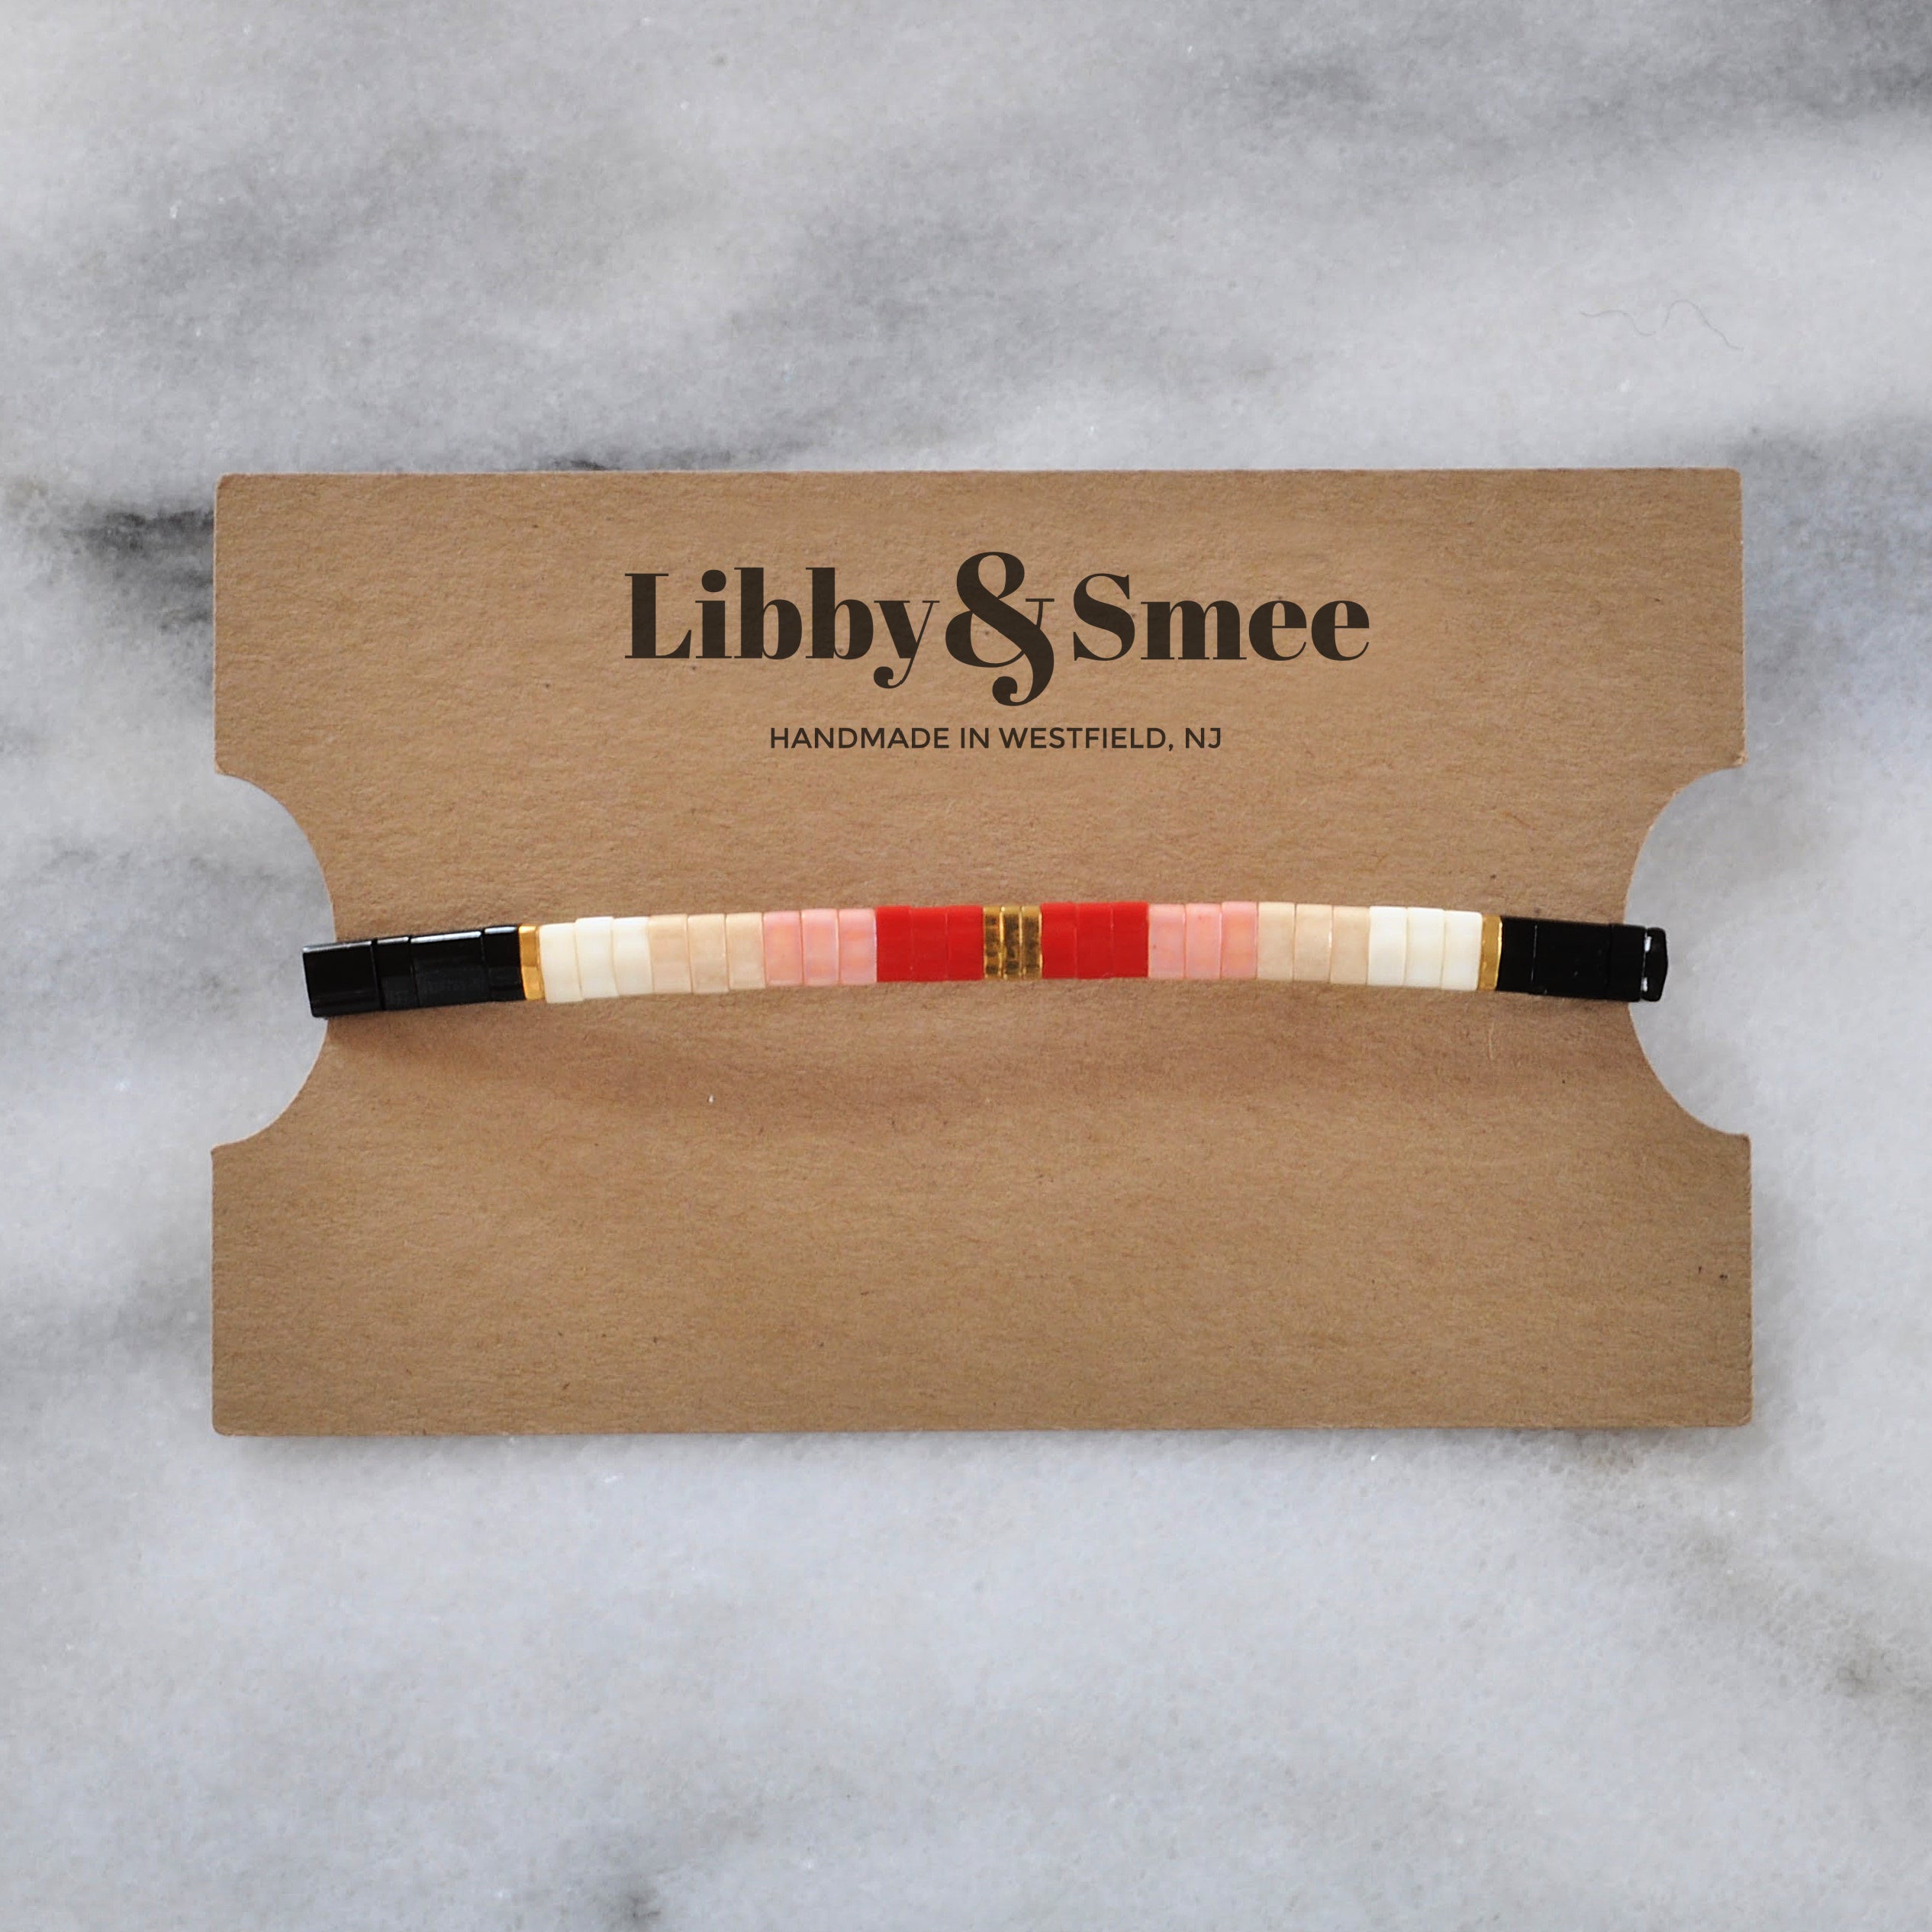 Libby & Smee stretch tile bracelet in Valentine Colorblock